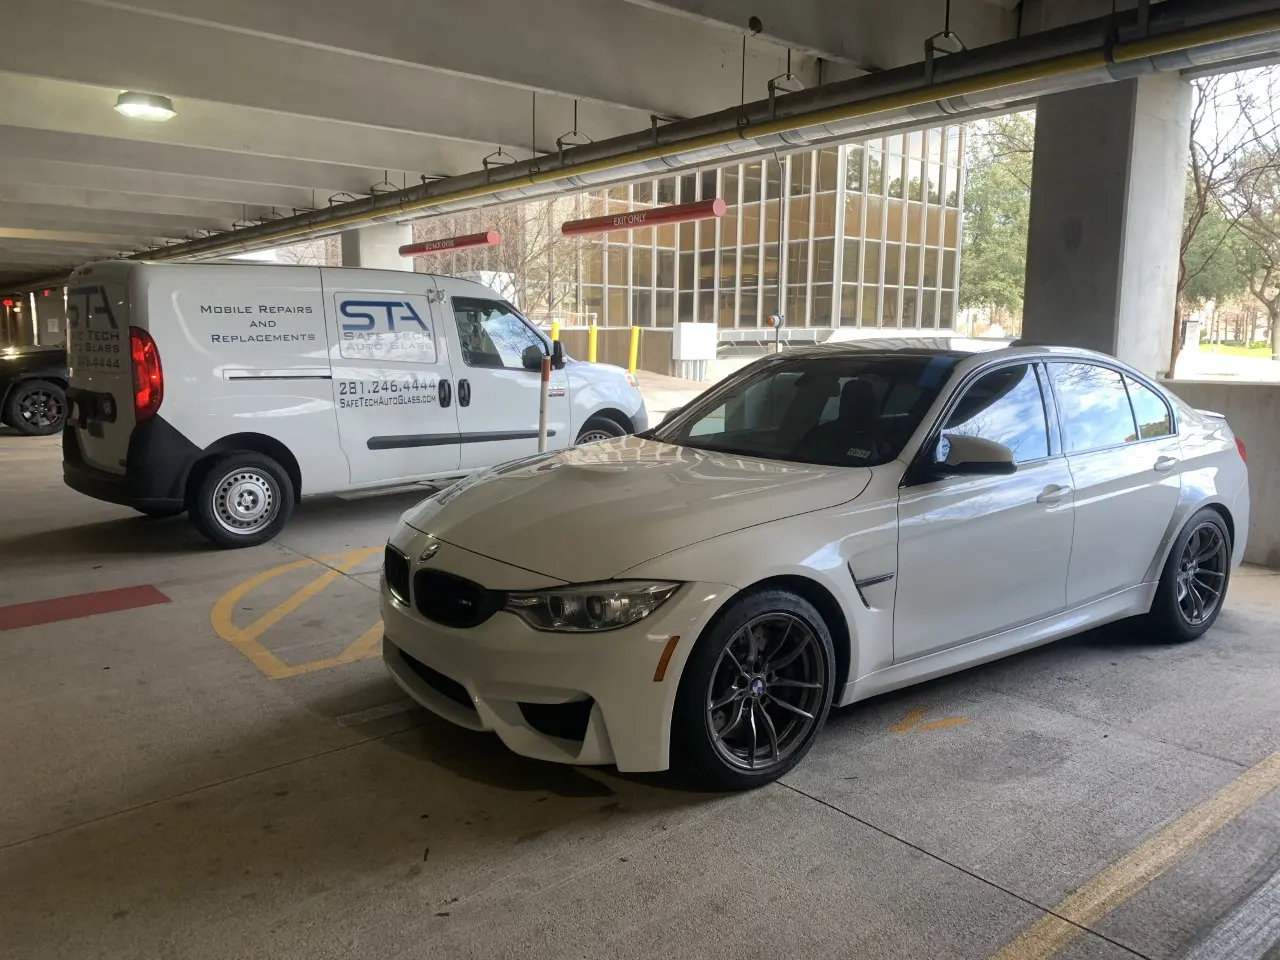 A white car parked in a parking garage next to a van.